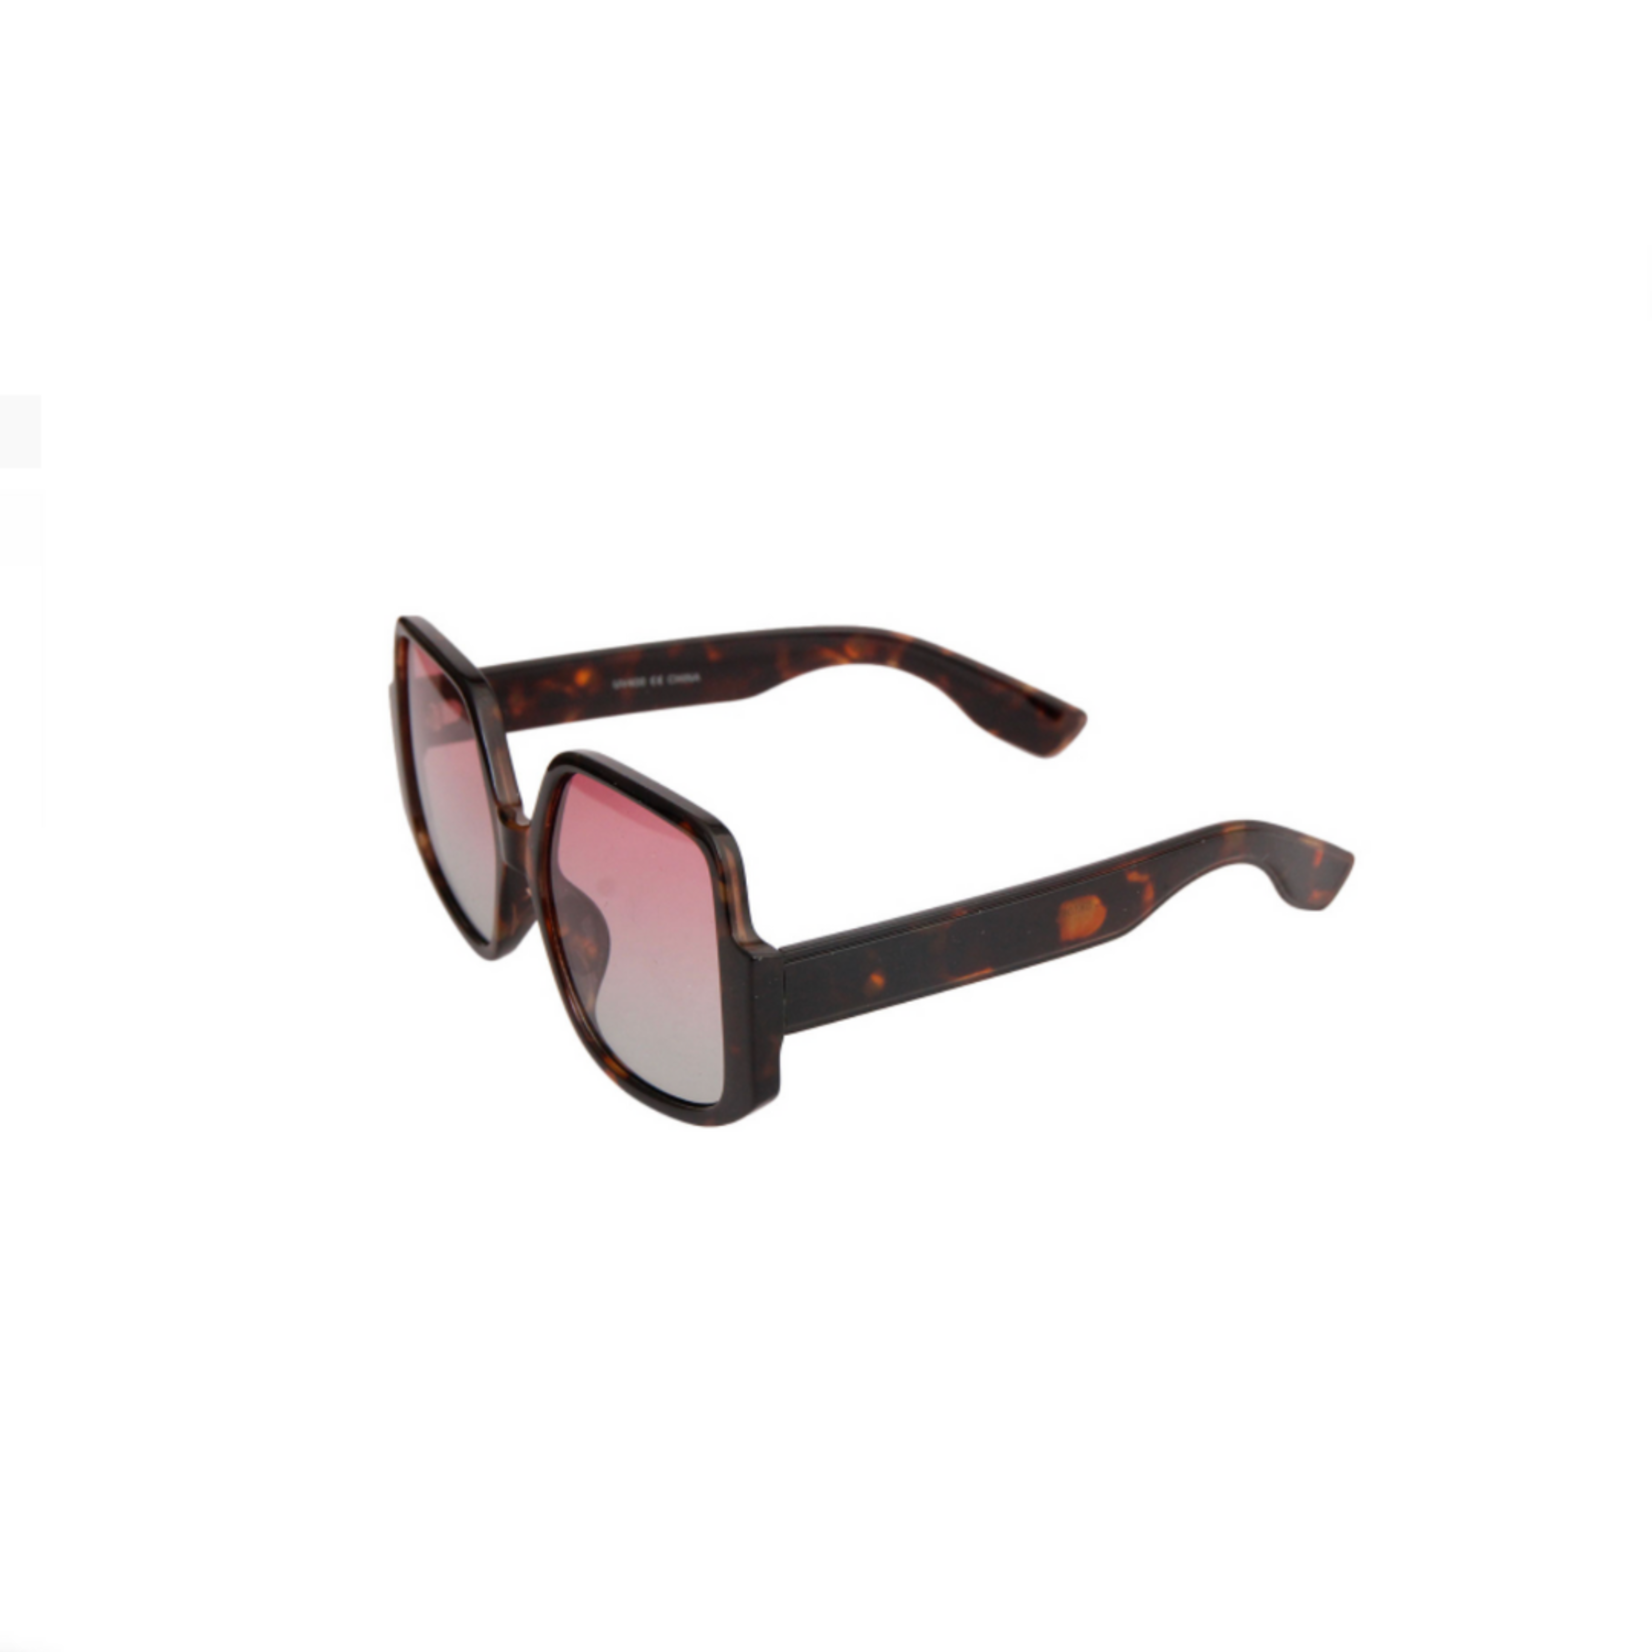 Retro Tortoiseshell Square Celine Style Sunglasses